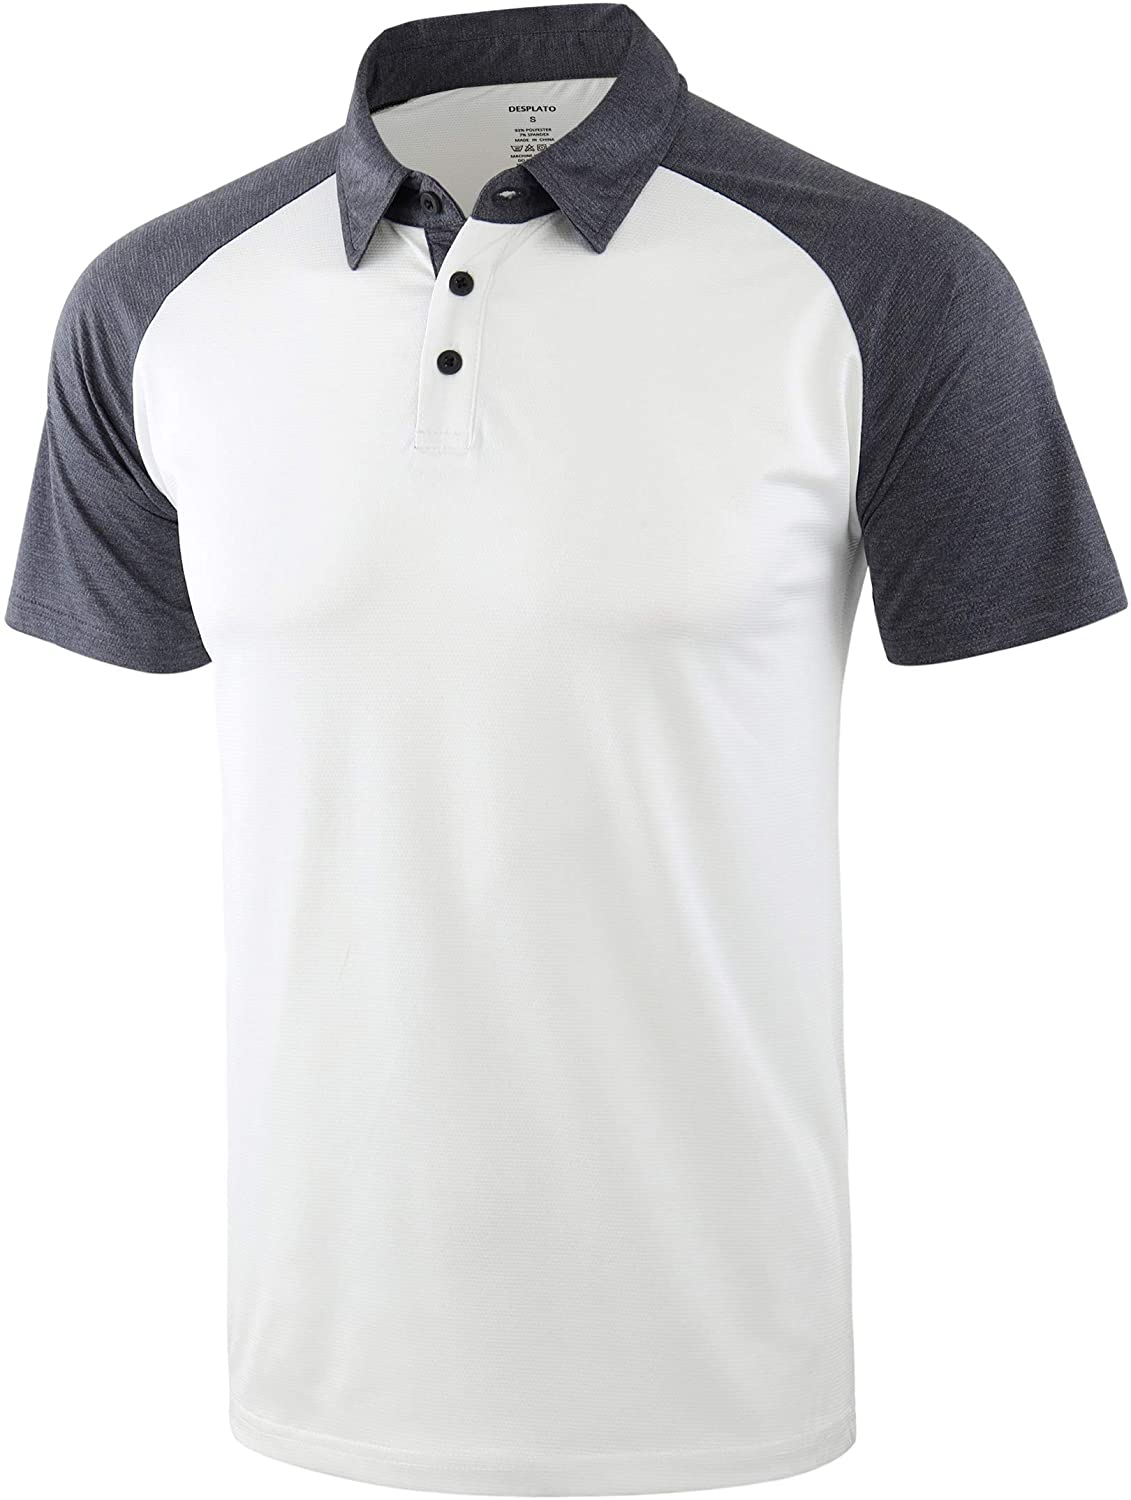 DESPLATO Men's Casual Basic Lightweight Active Tagless Short Sleeve Polo Shirts